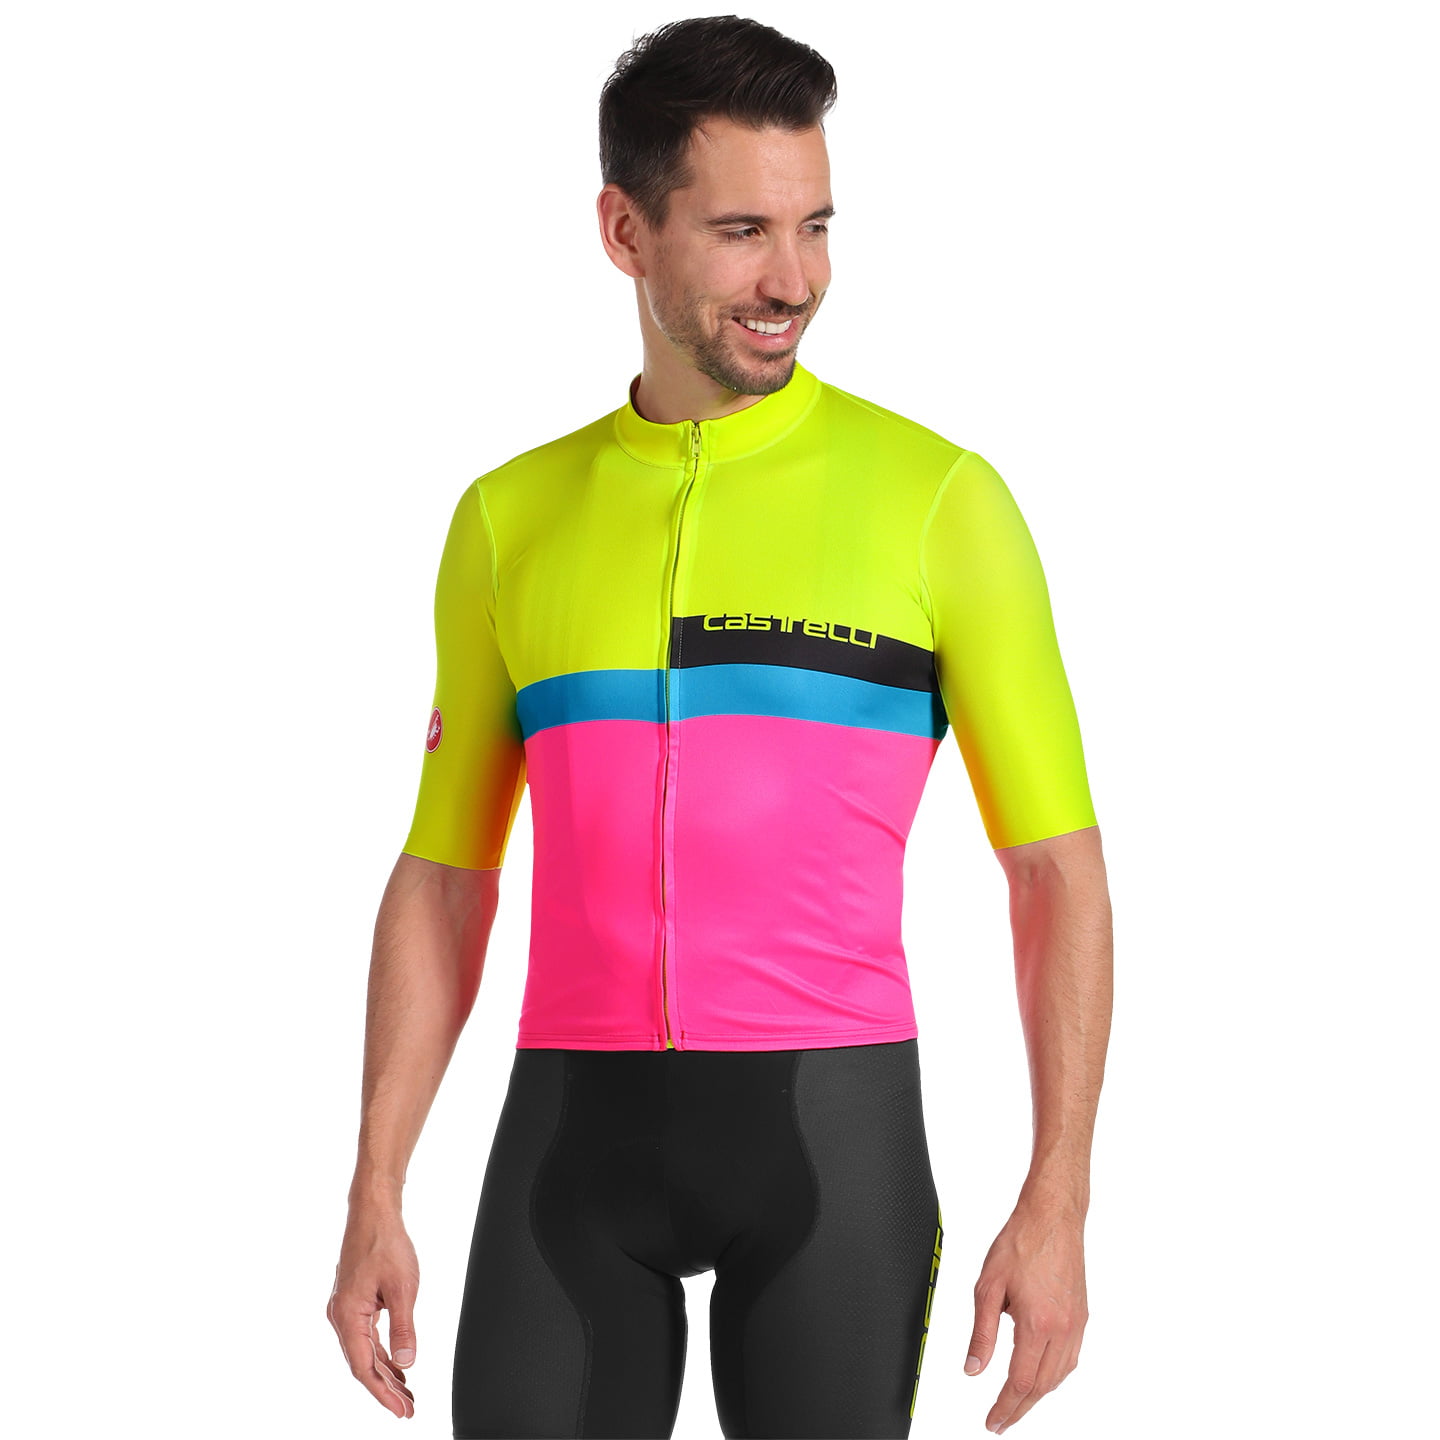 CASTELLI A Blocco Short Sleeve Jersey Short Sleeve Jersey, for men, size L, Cycling jersey, Cycling clothing